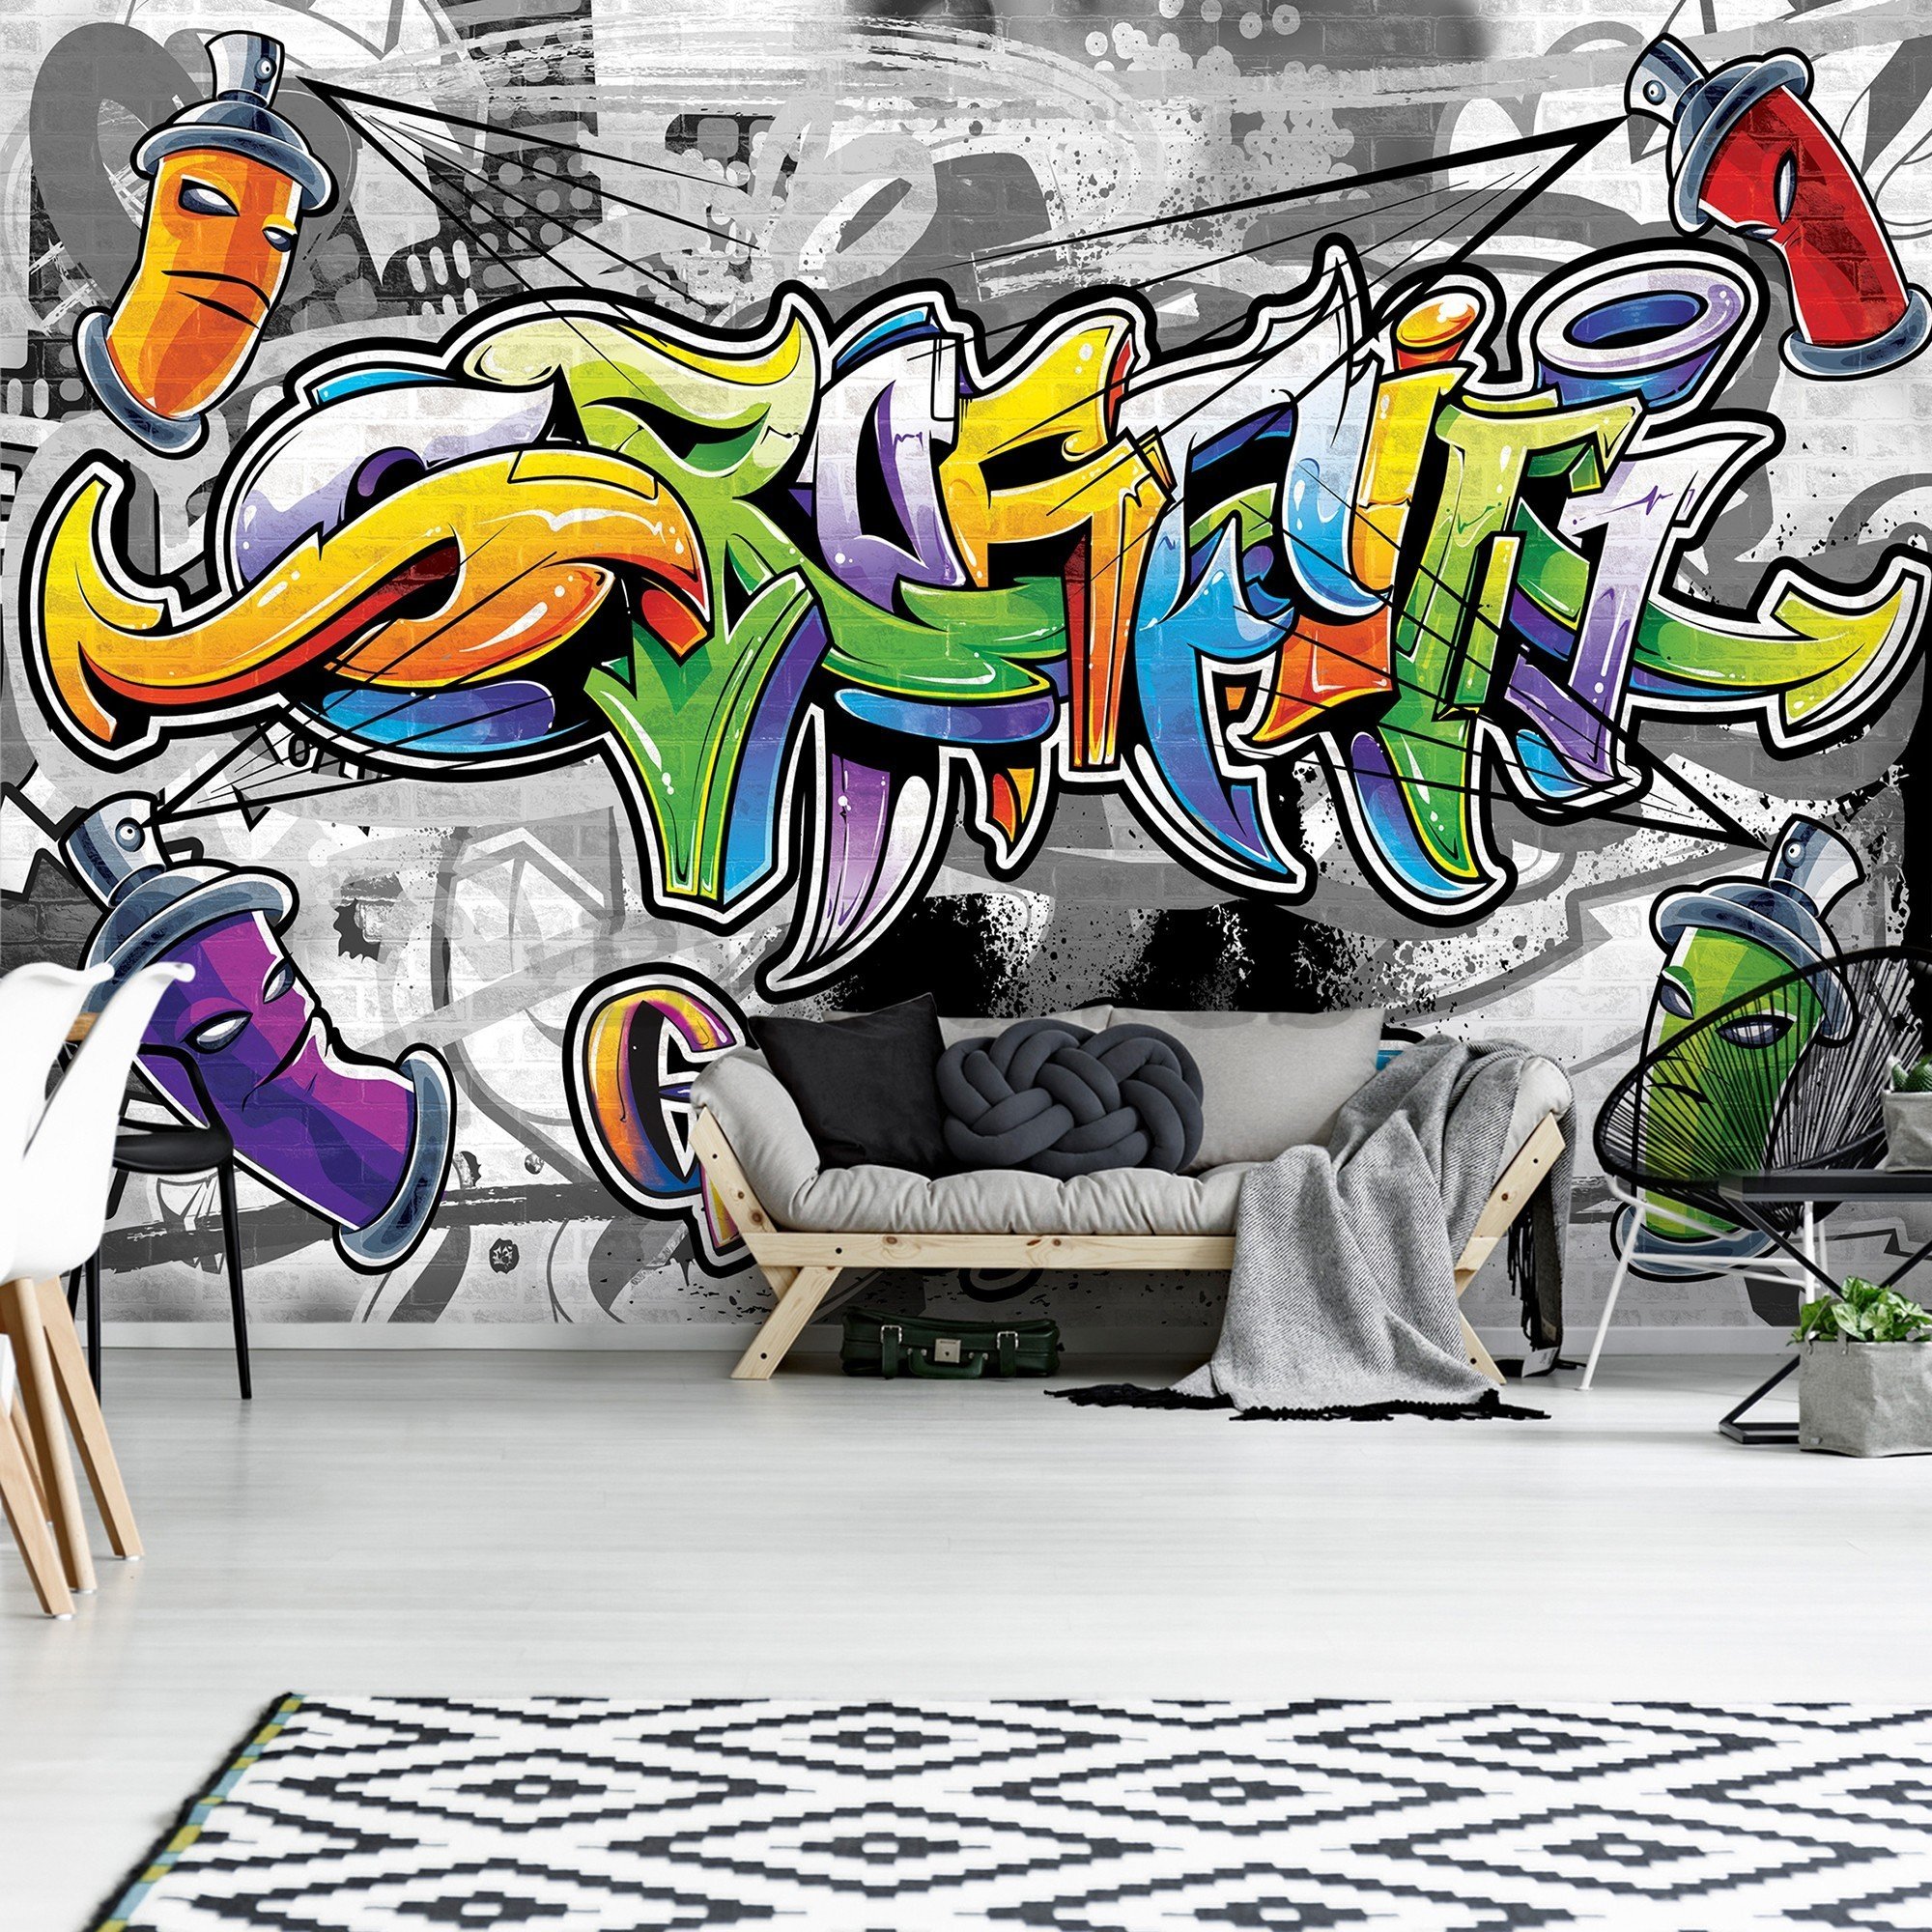 Fotomural TNT: Graffiti en color - 416x254 cm